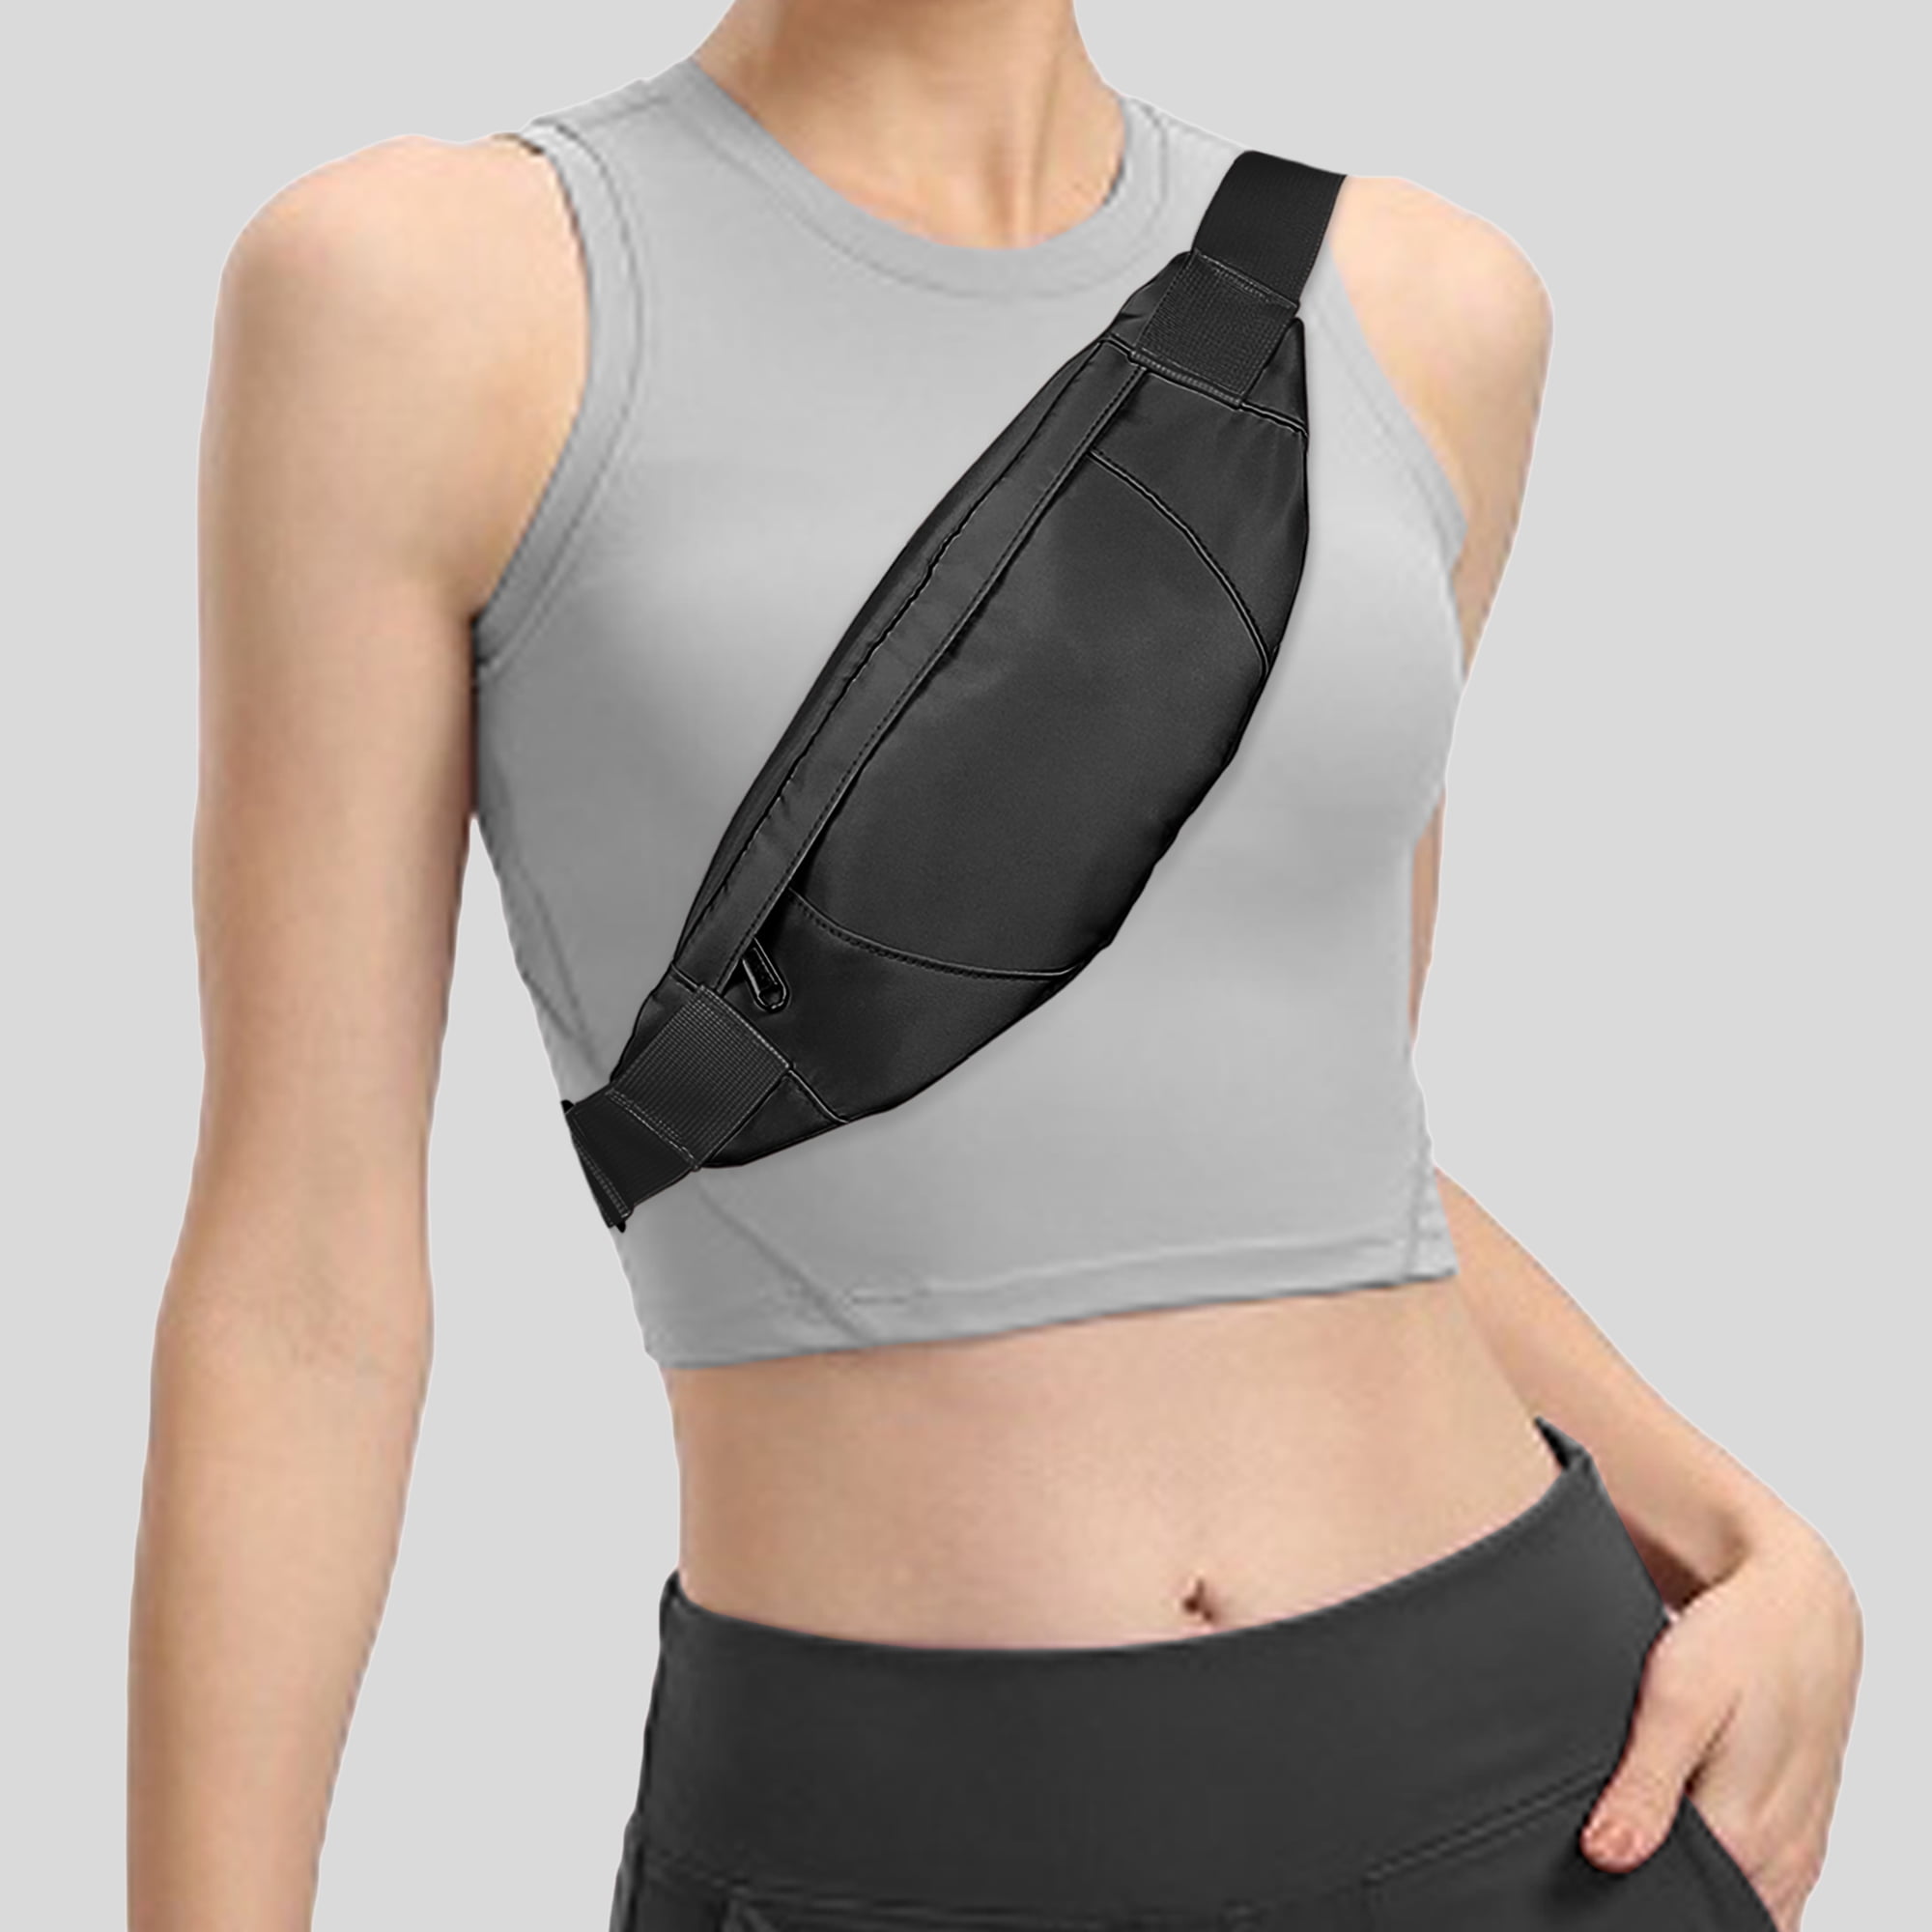 Fanny Packs for Women Fashionable Crossbody Bags Belt Bag Multi Color  Waterproof Waist Bag Sports Sling Bag for Men with Headphone Jack Grey